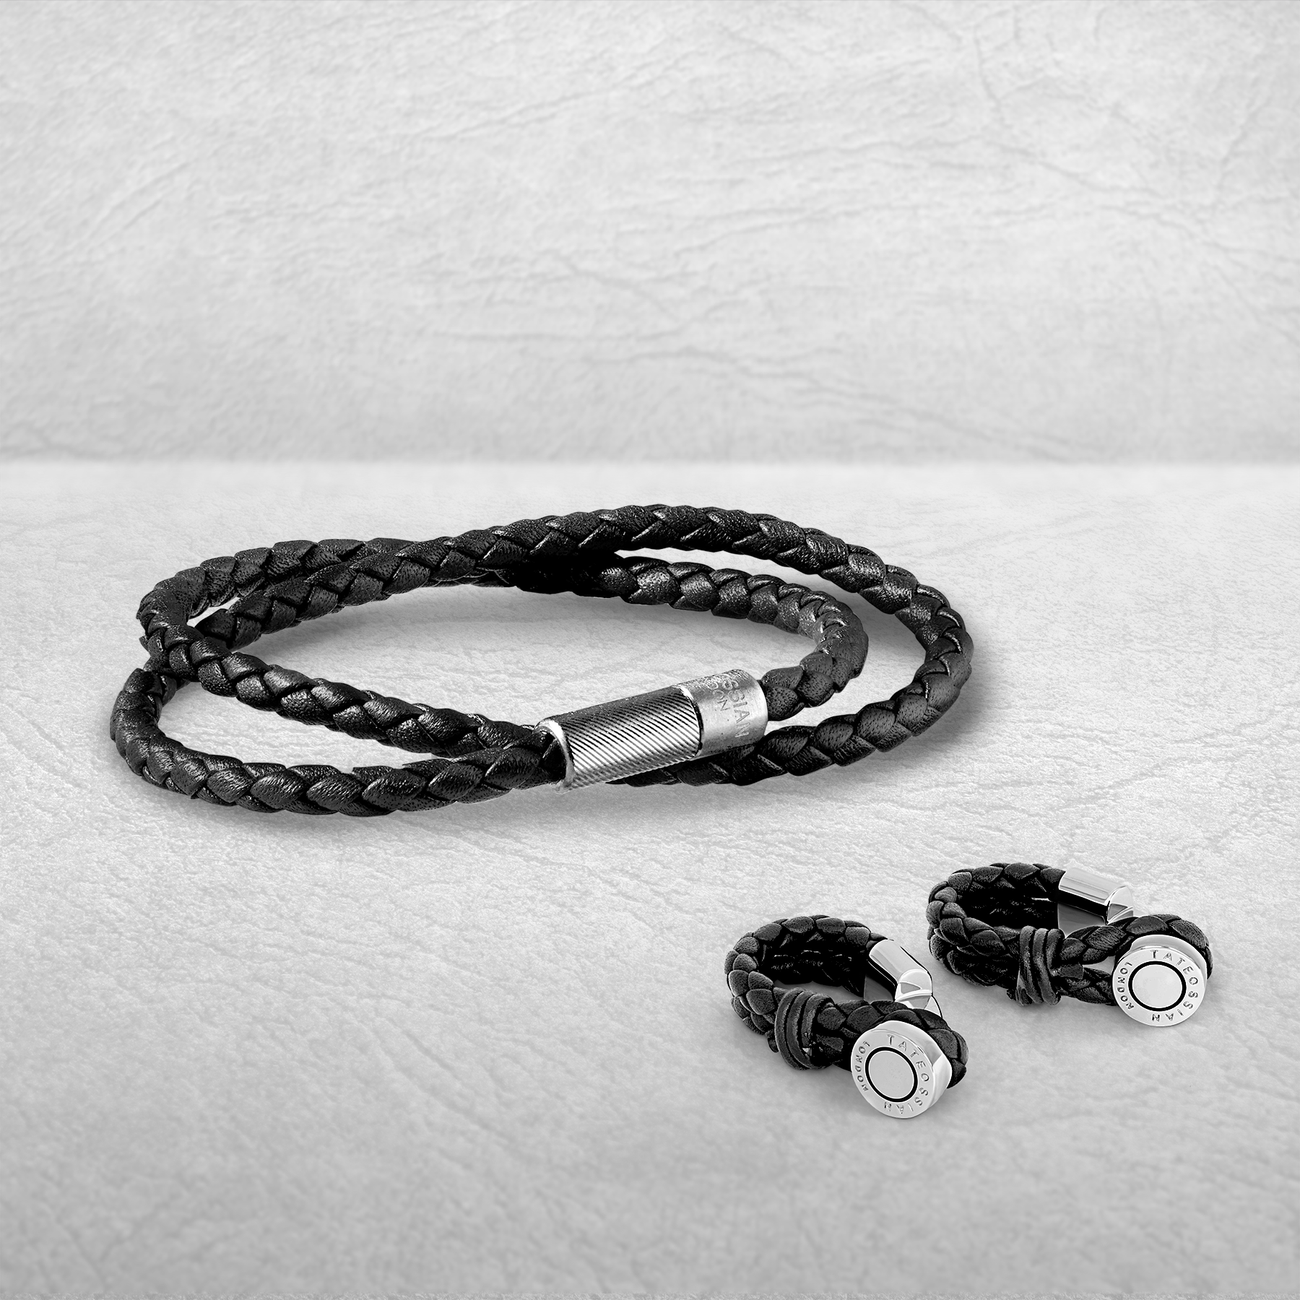 Pelle Wrap Around cufflinks in black leather with rhodium finish-Novelty Cufflinks-Tateossian-Cufflinks.com.sg